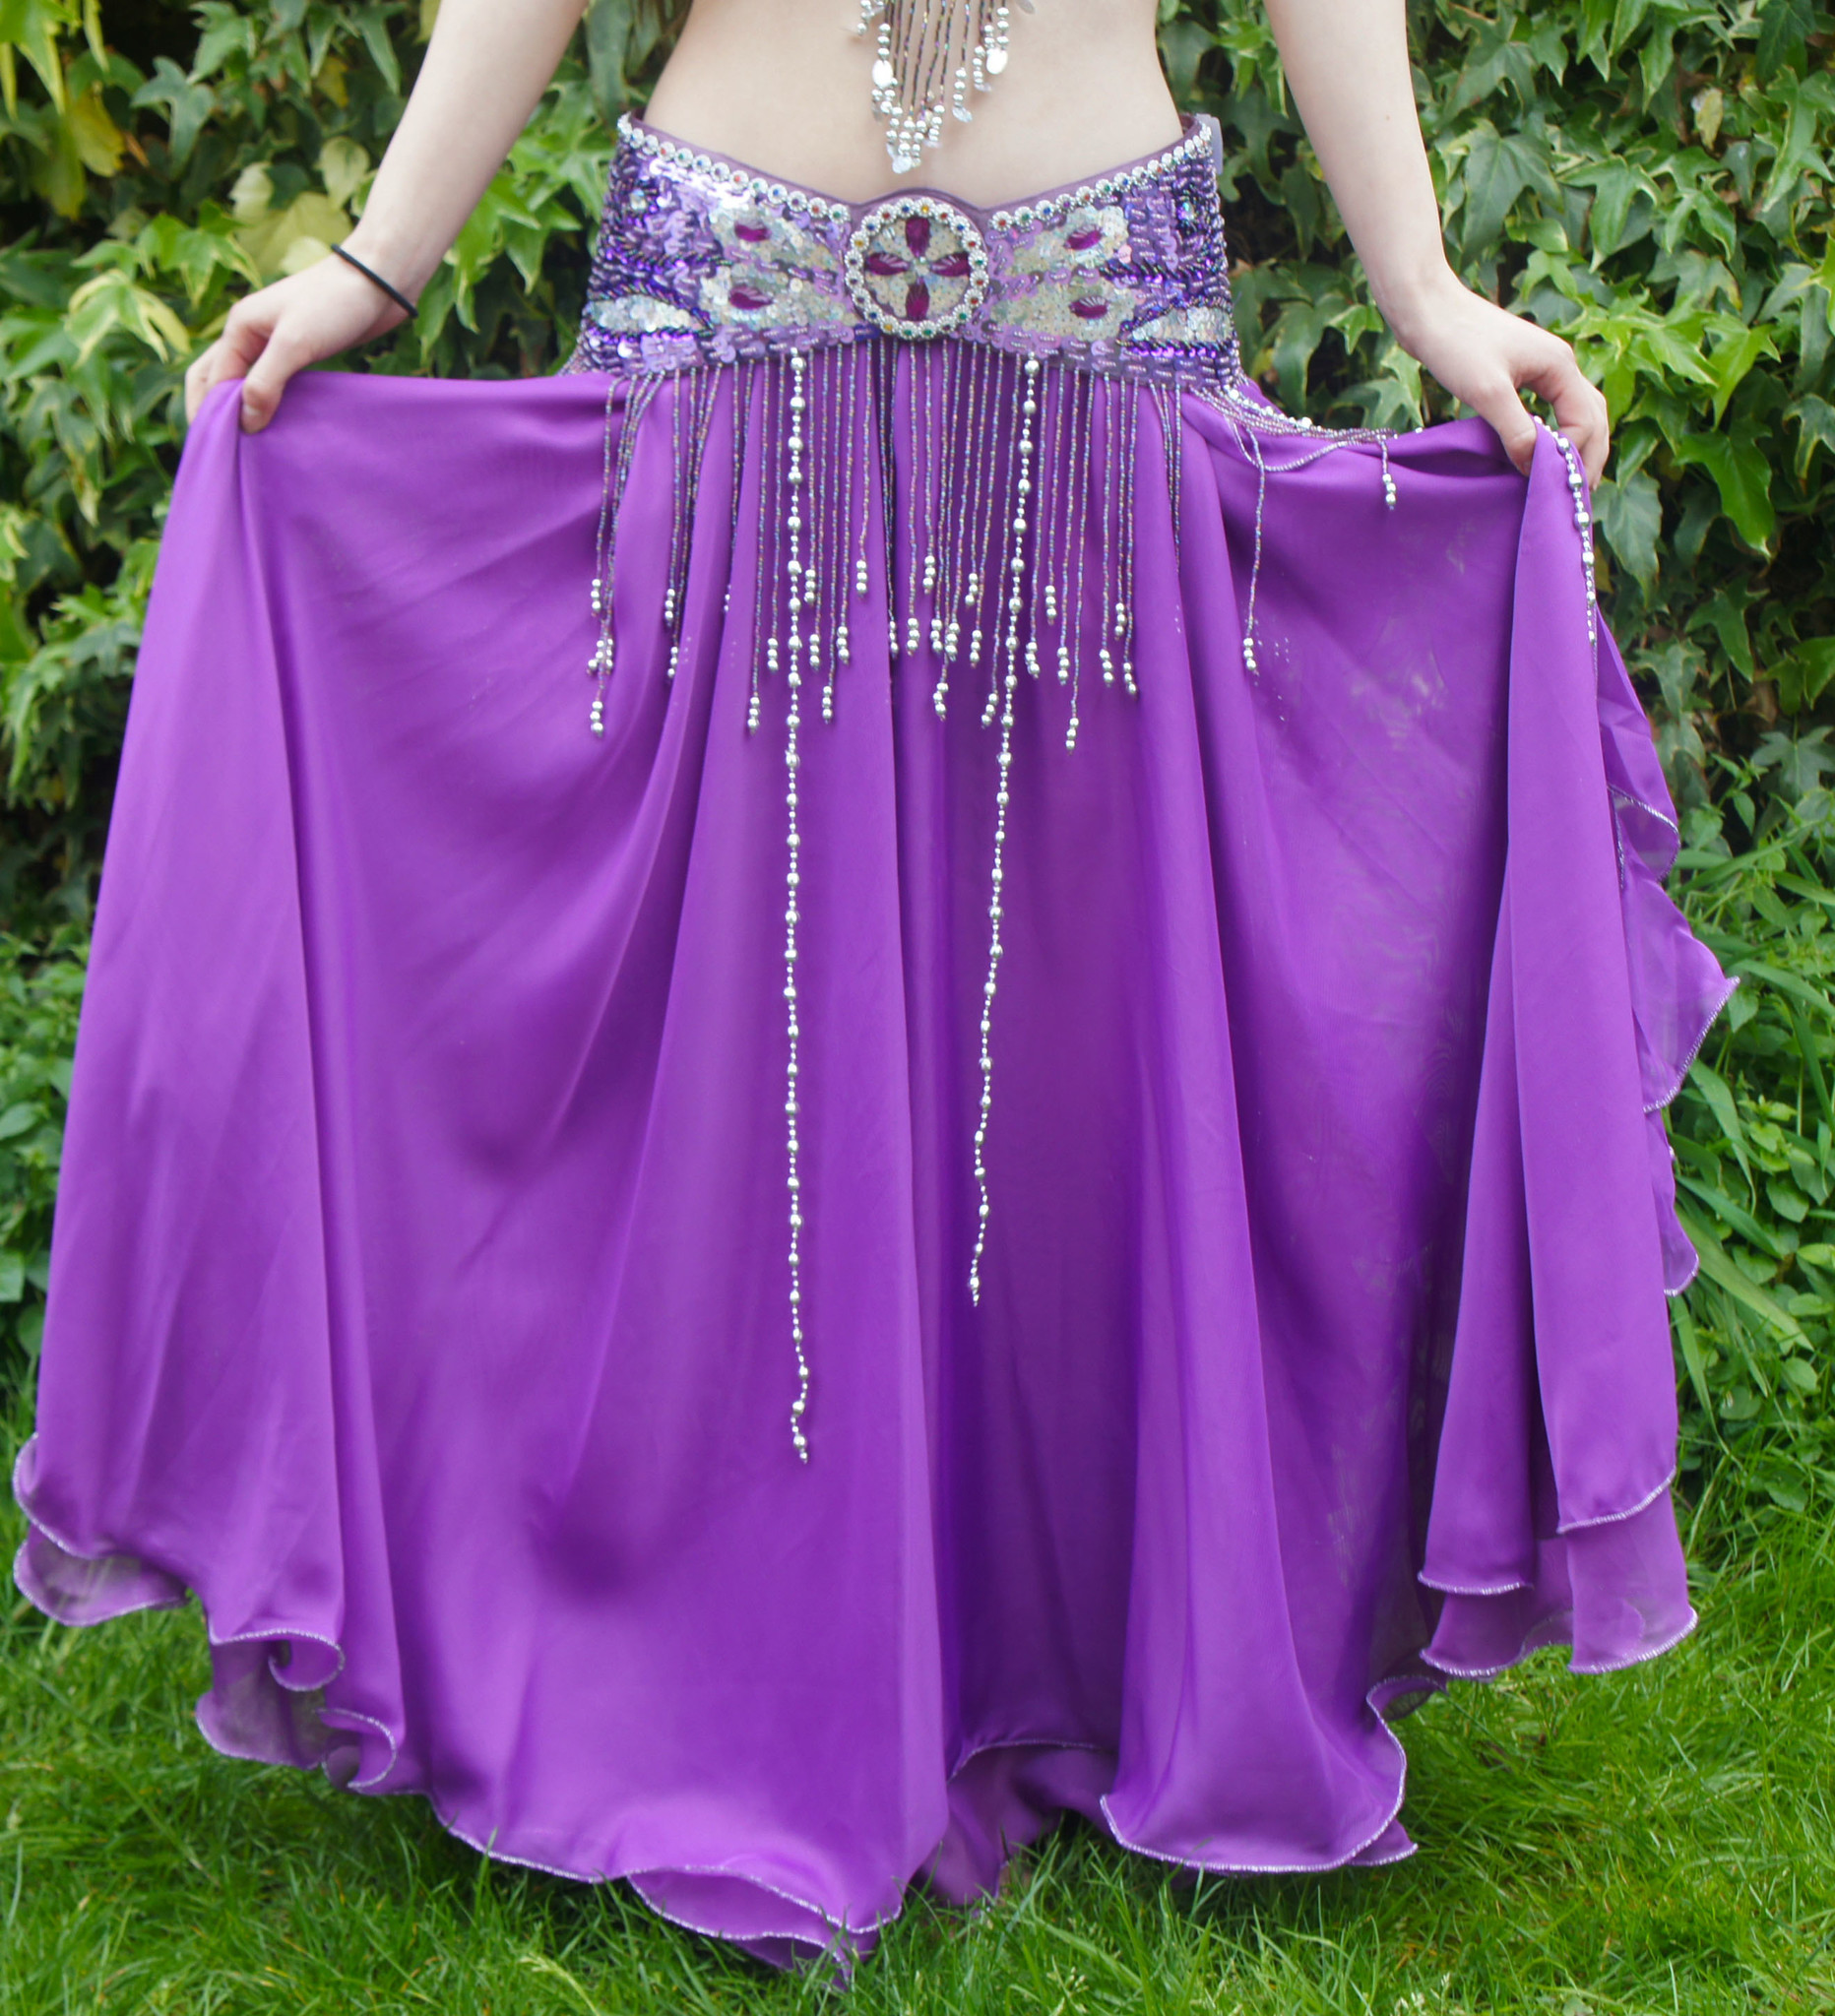 Belly dance skirt purple